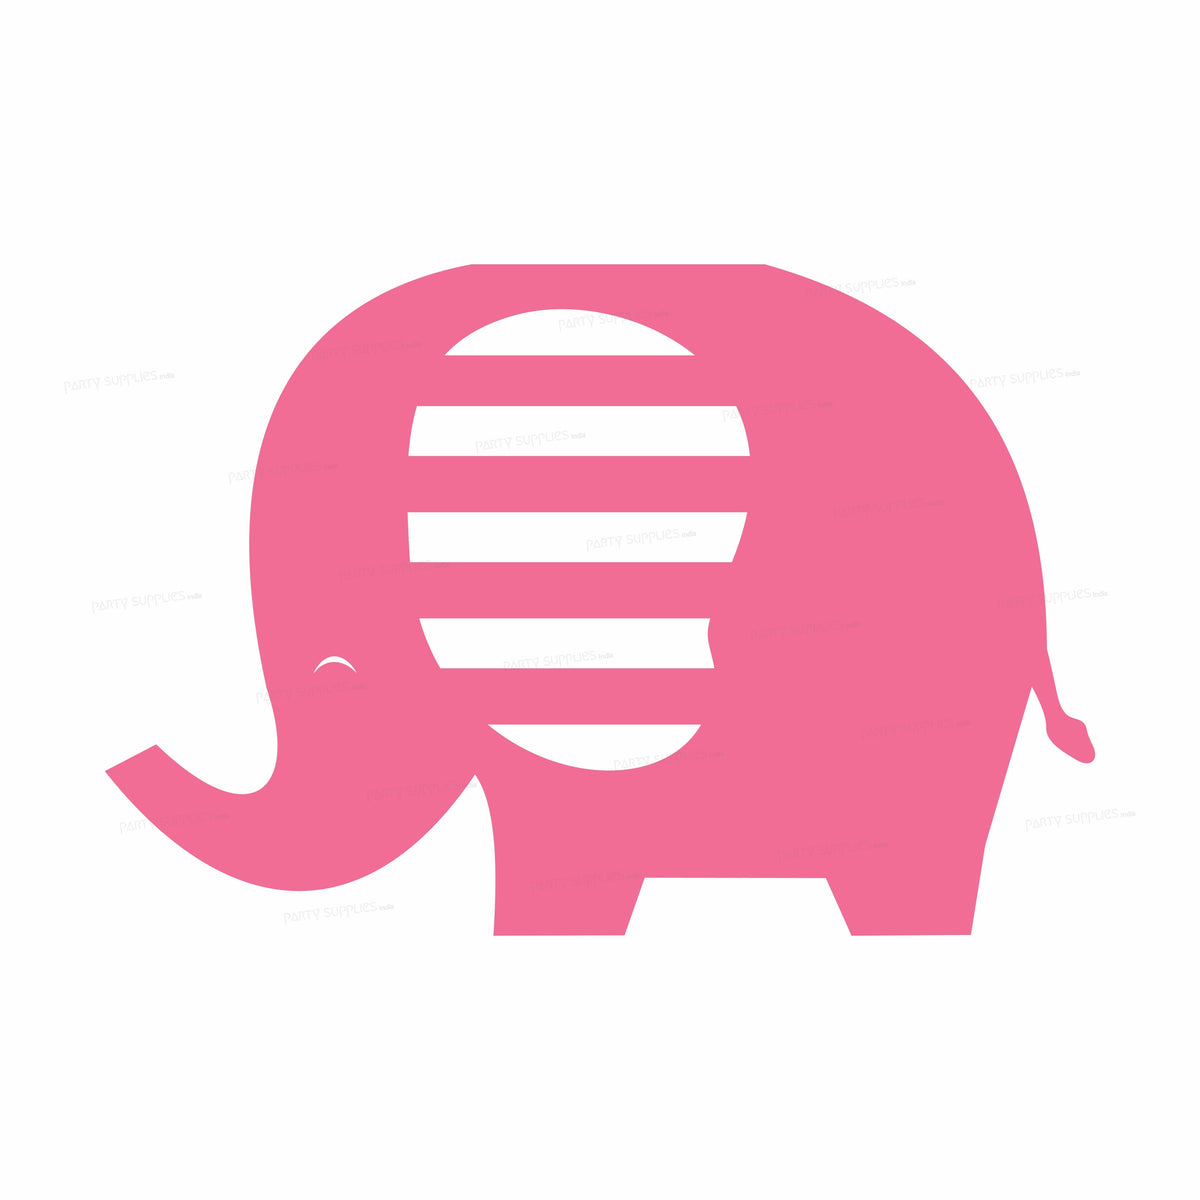 PSI Pink Elephant Theme Cutout - 03